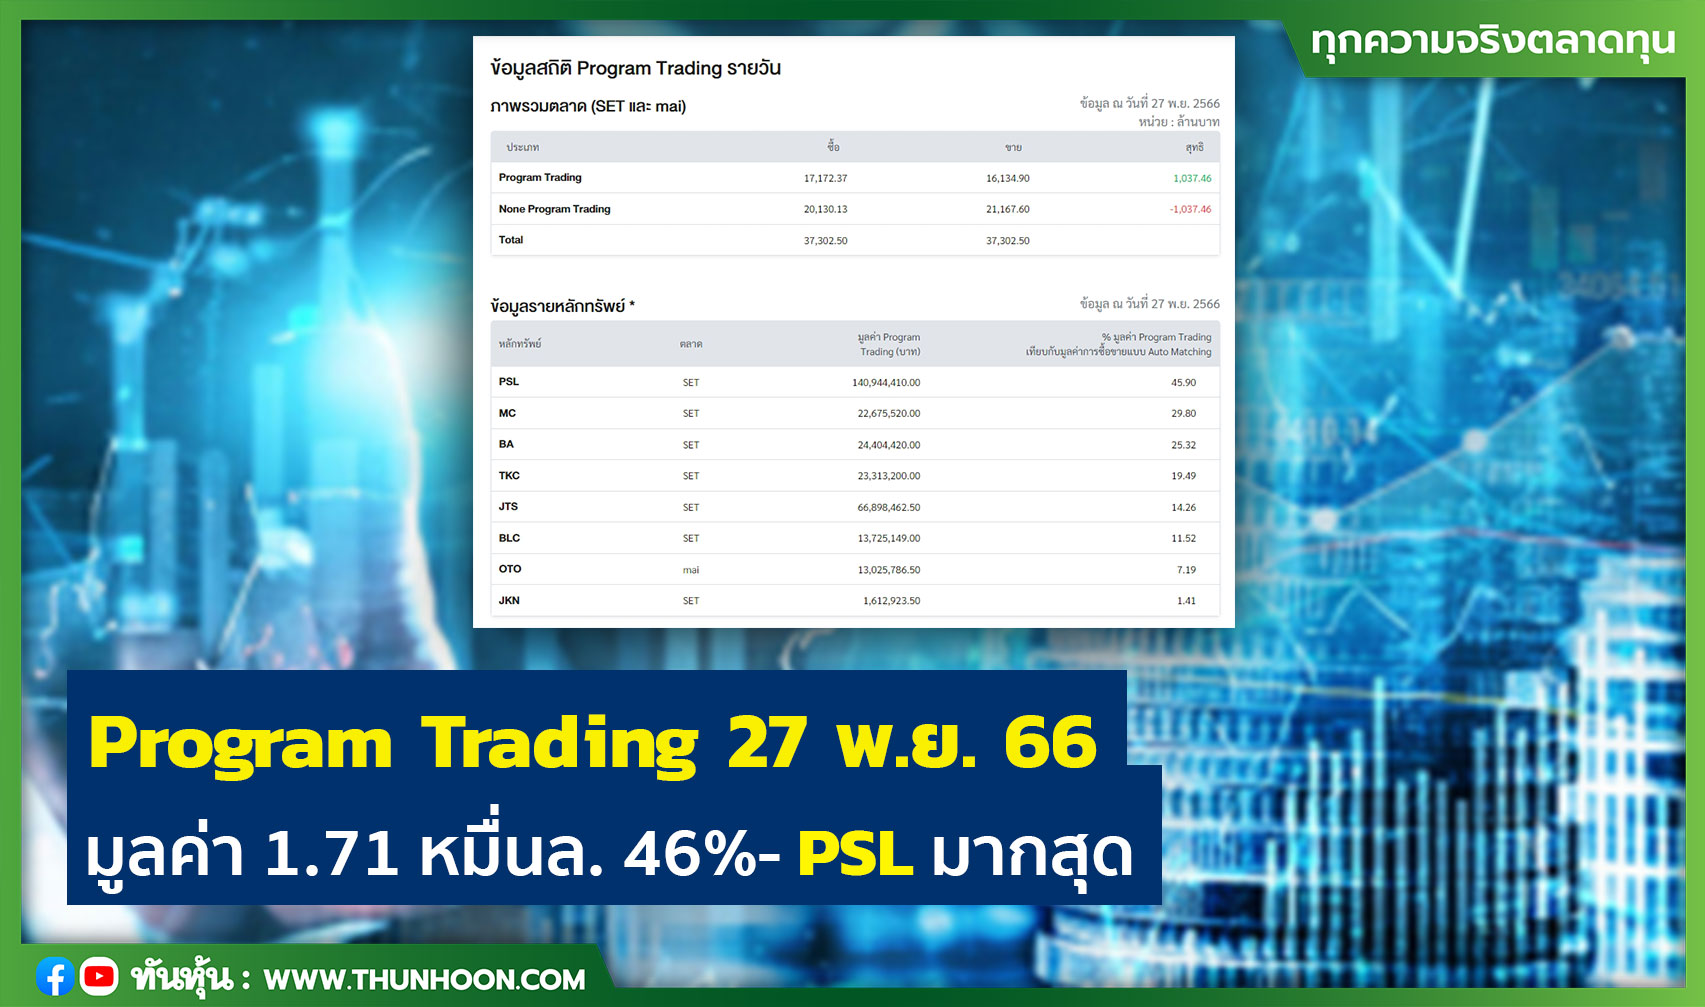 Program Trading 27 พ.ย. 66 มูลค่า 1.71 หมื่นล. 46%- PSL มากสุด